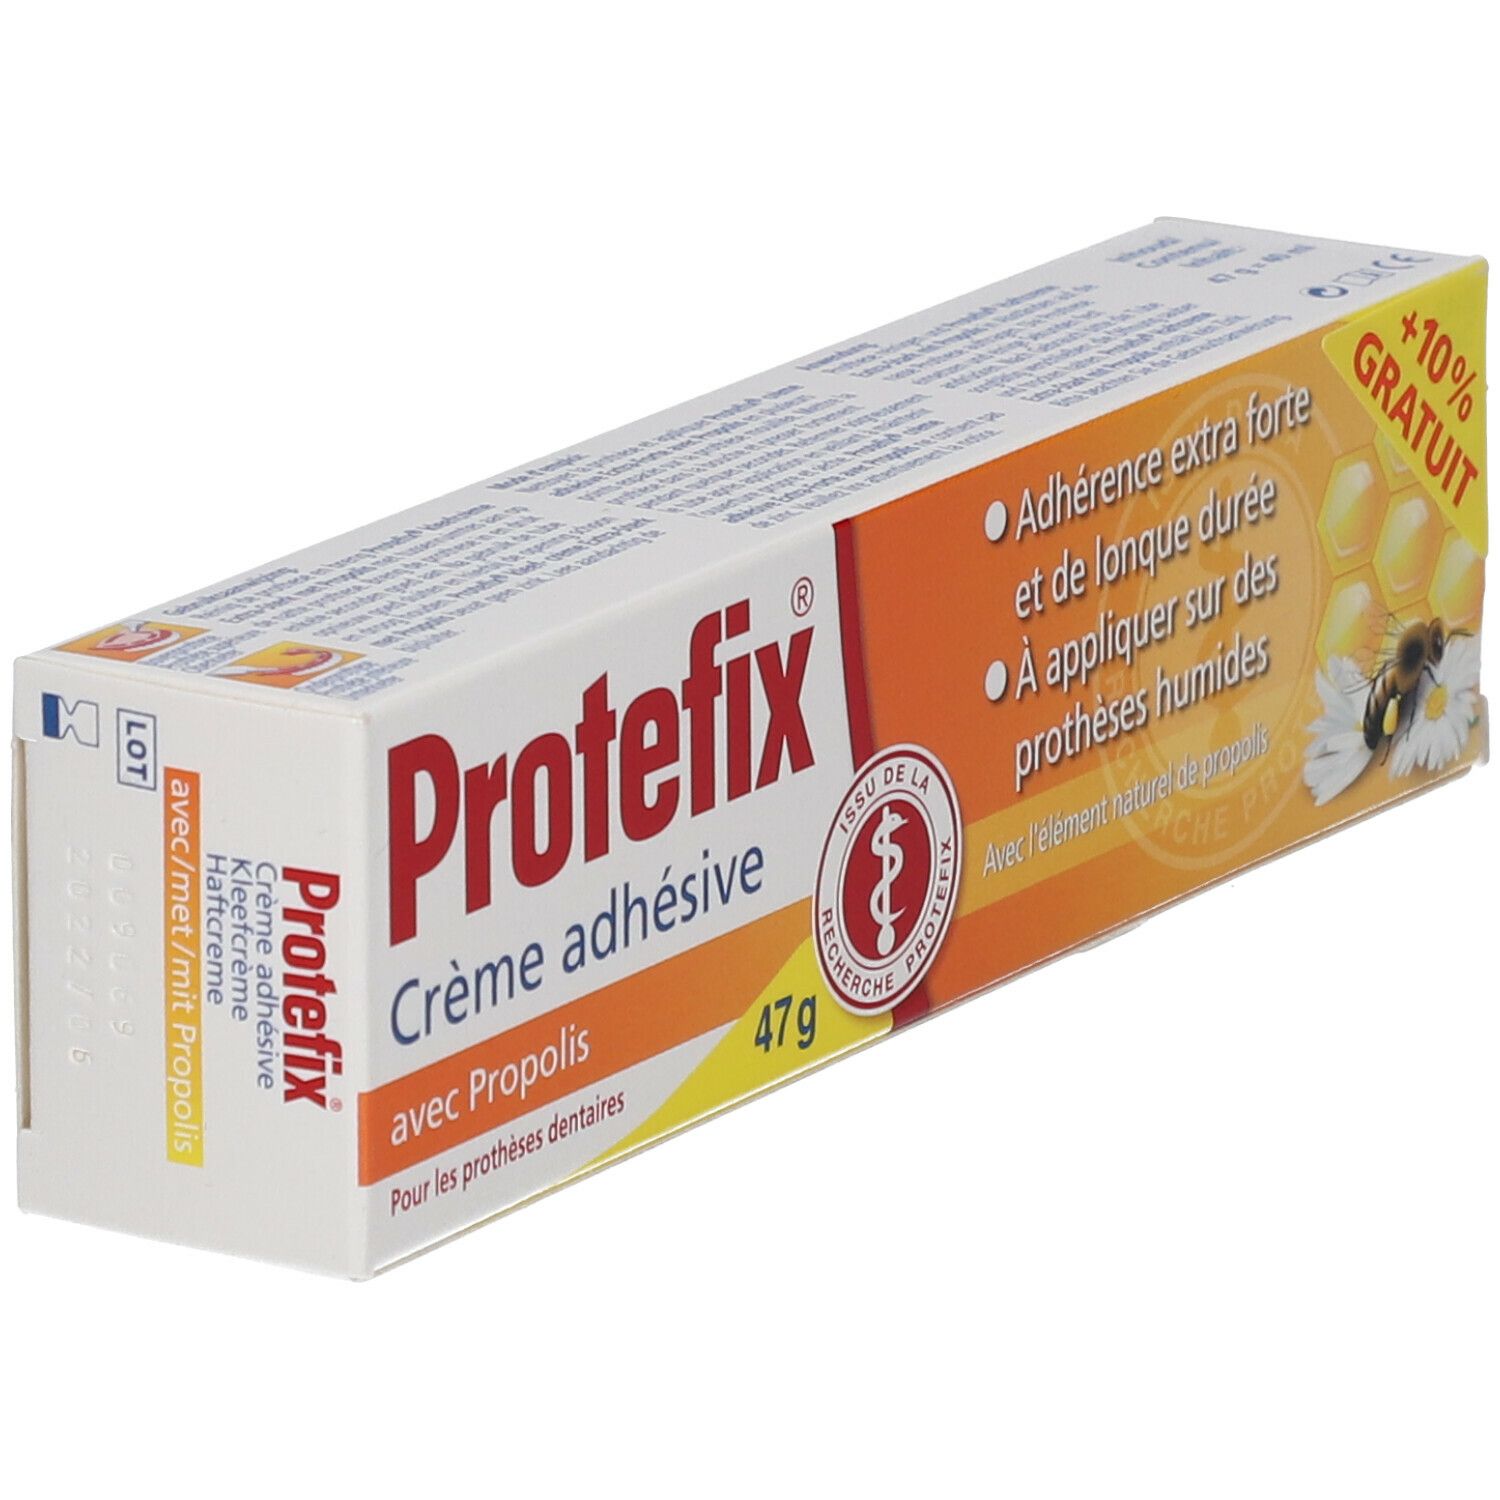 Protefix® Haftcreme X-Strong mit Propolis